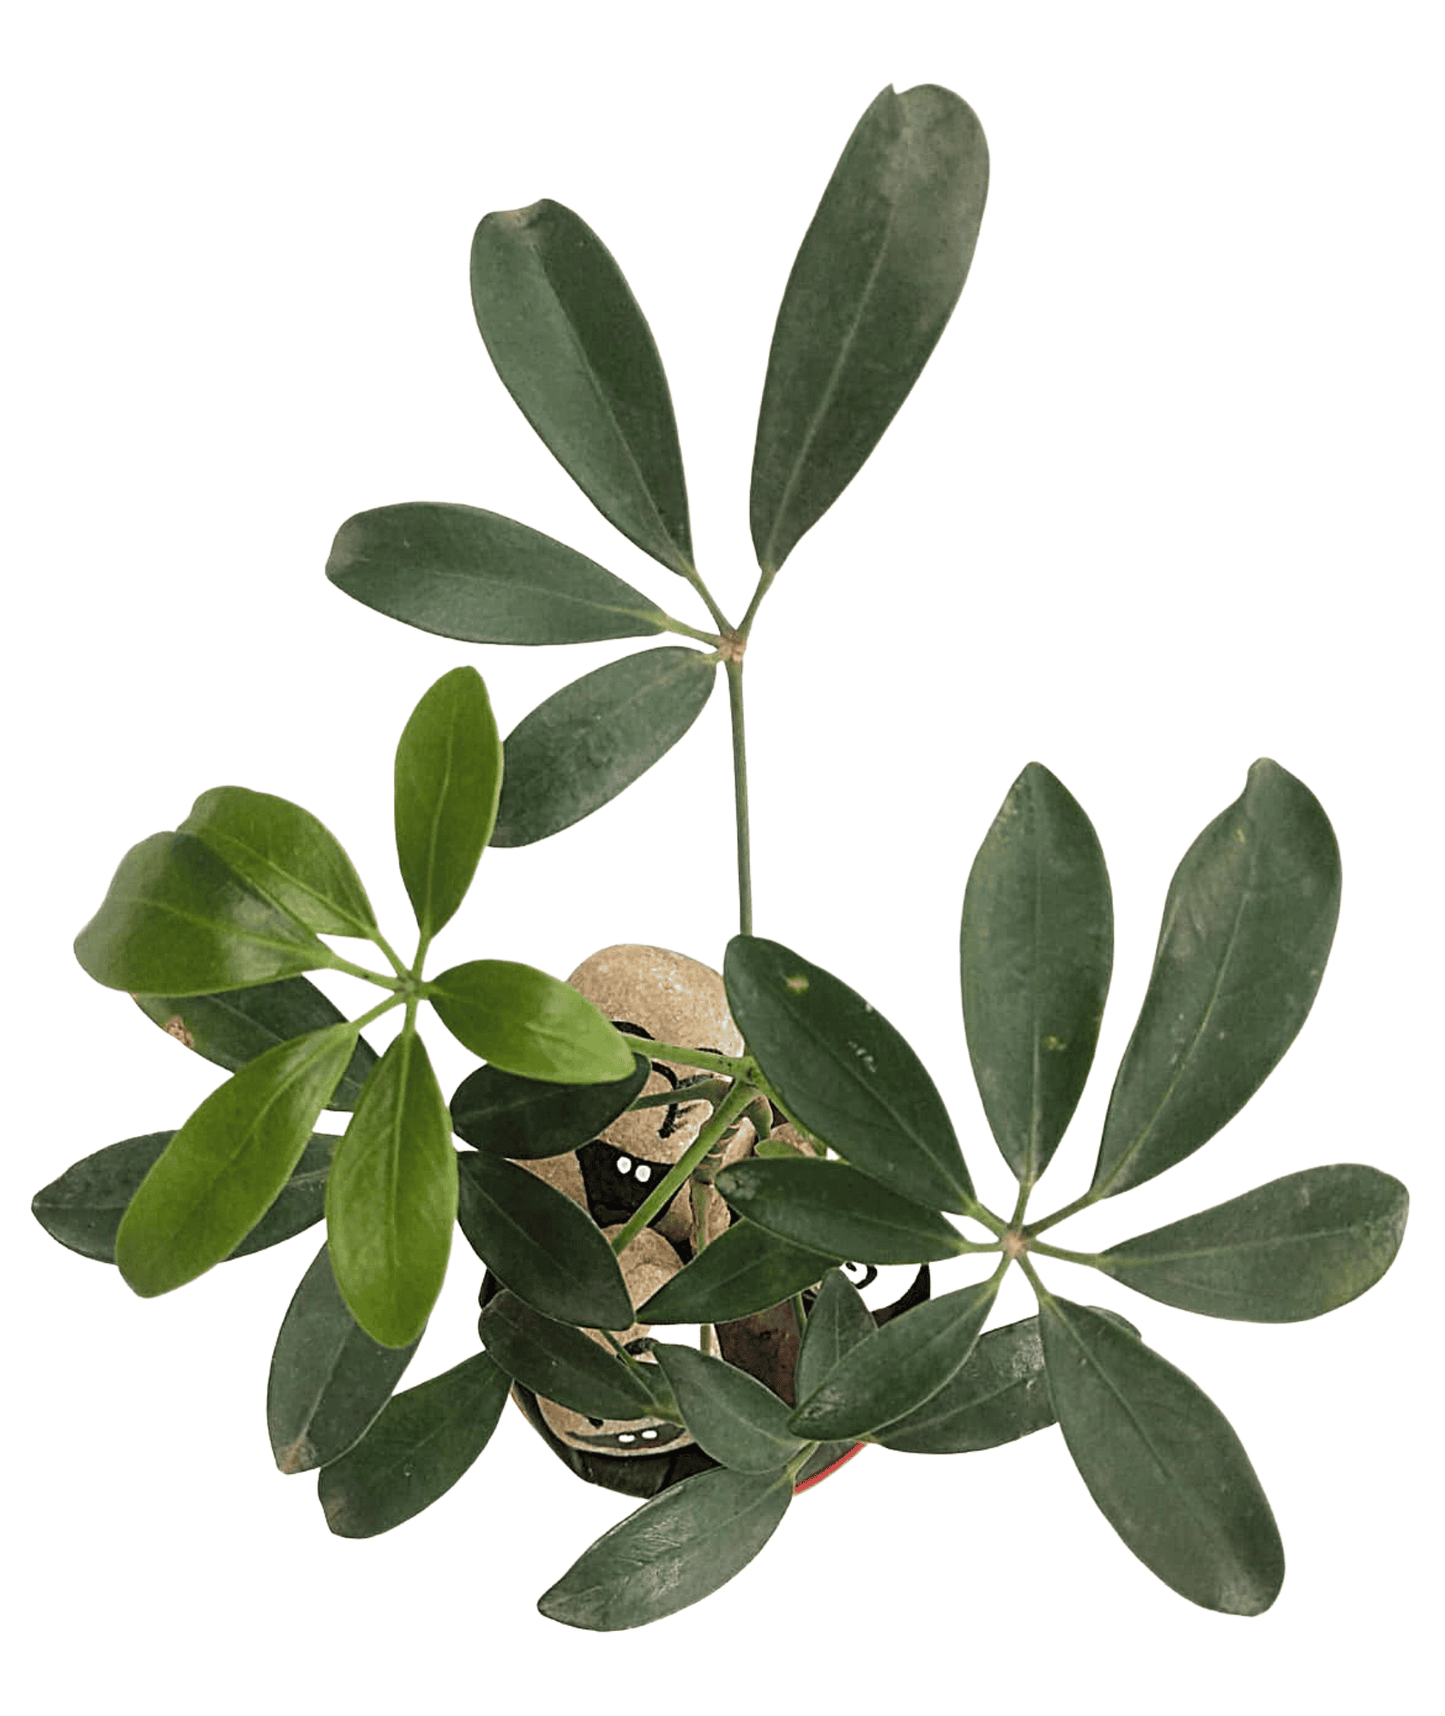 Dwarf Umbrella - Umbrella Tree Plant – Schefflera Arboricola